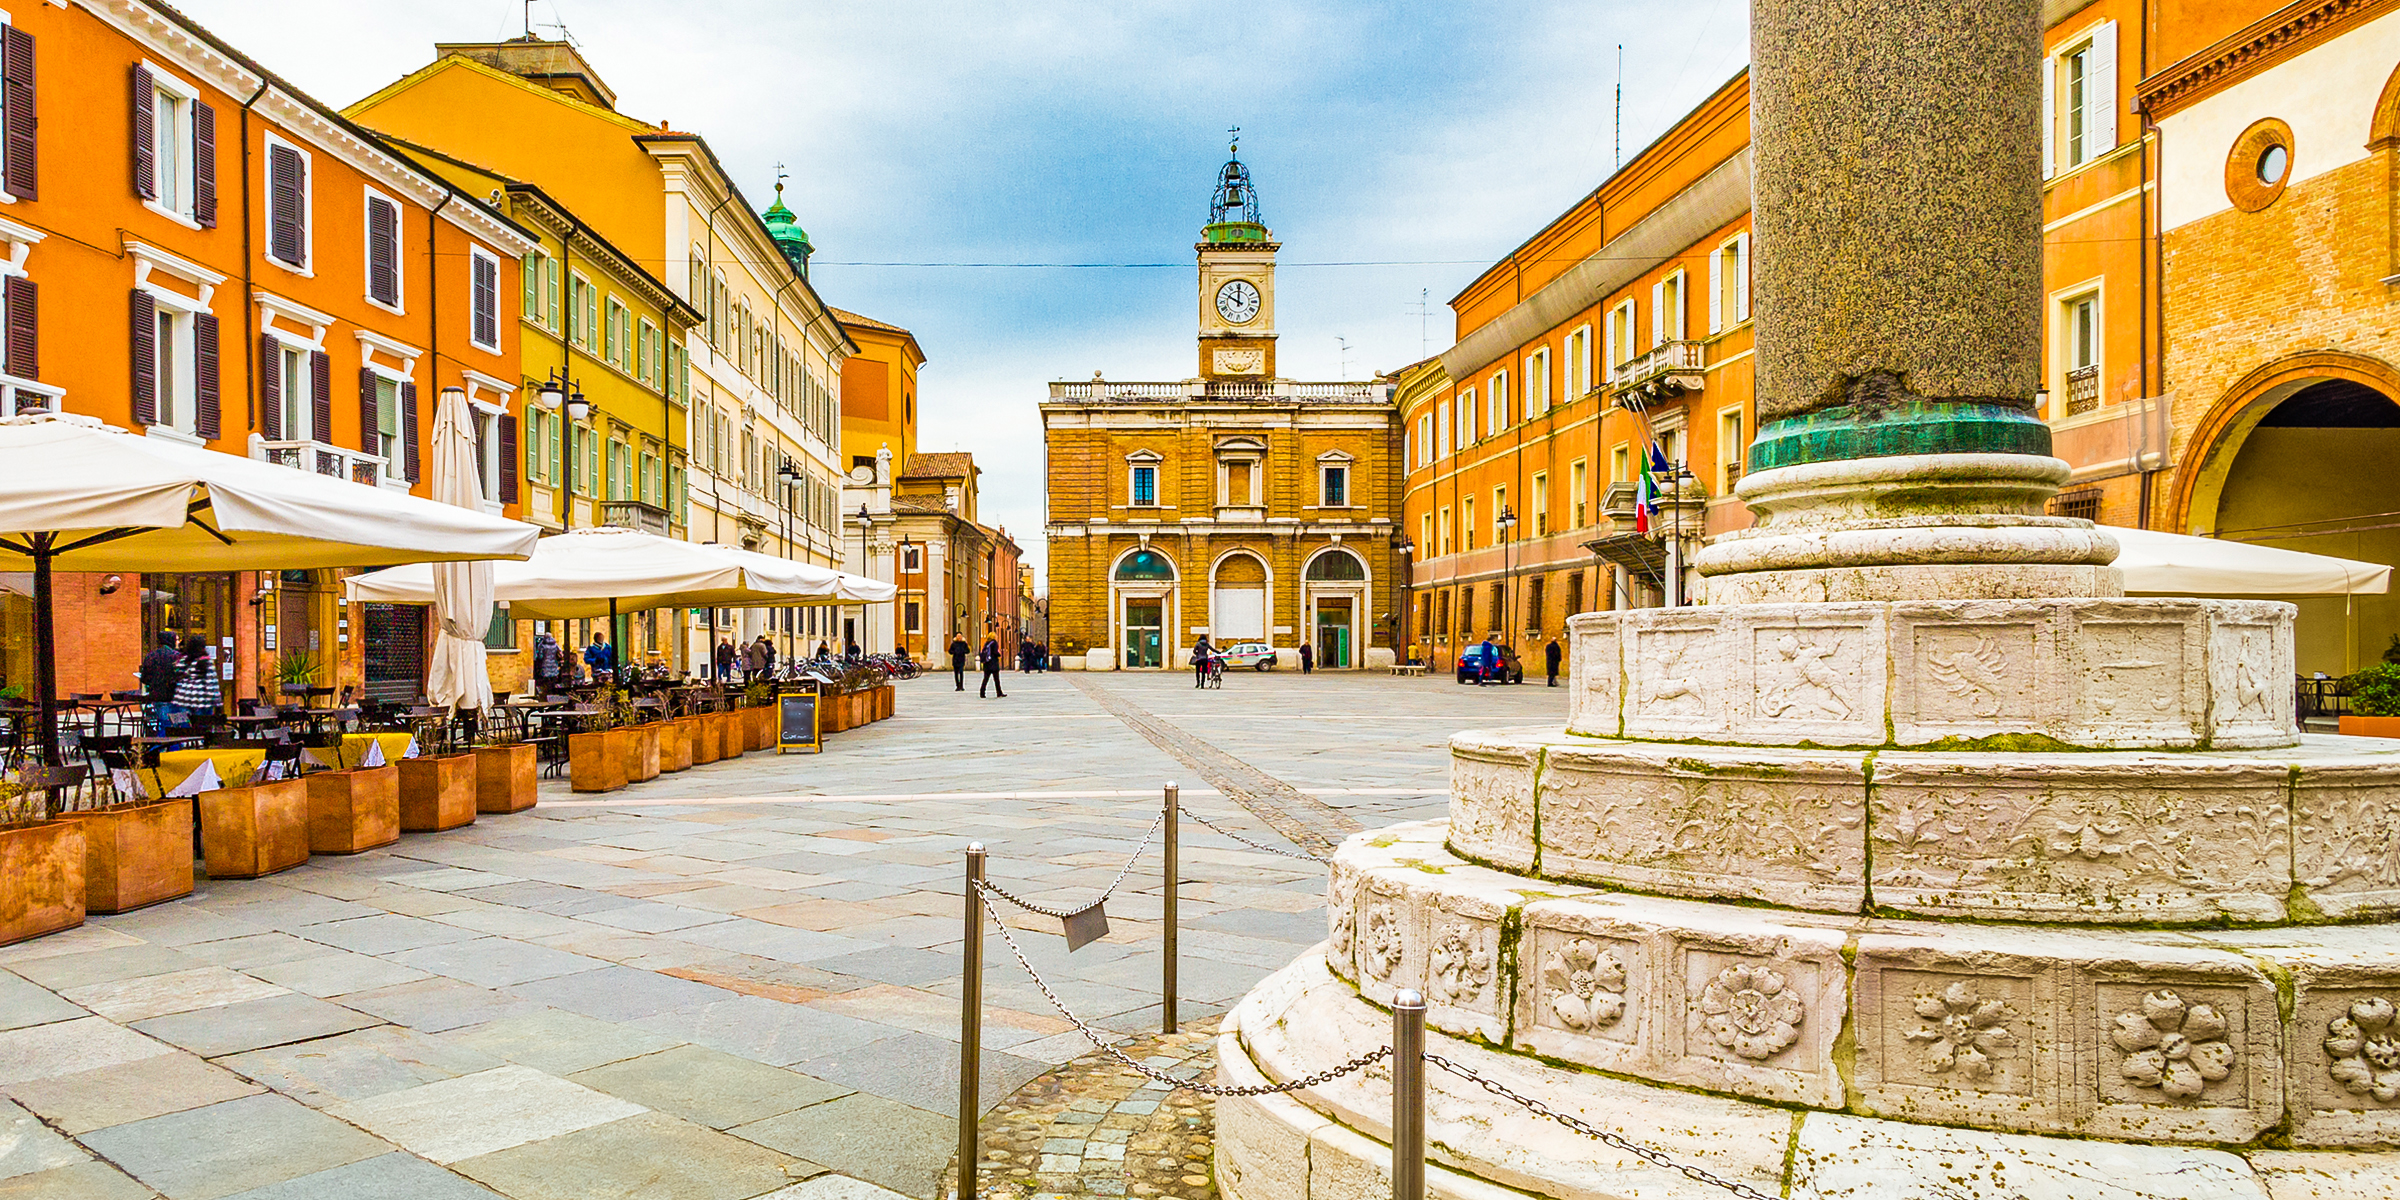 Ravenna, Italy | Source: Shutterstock